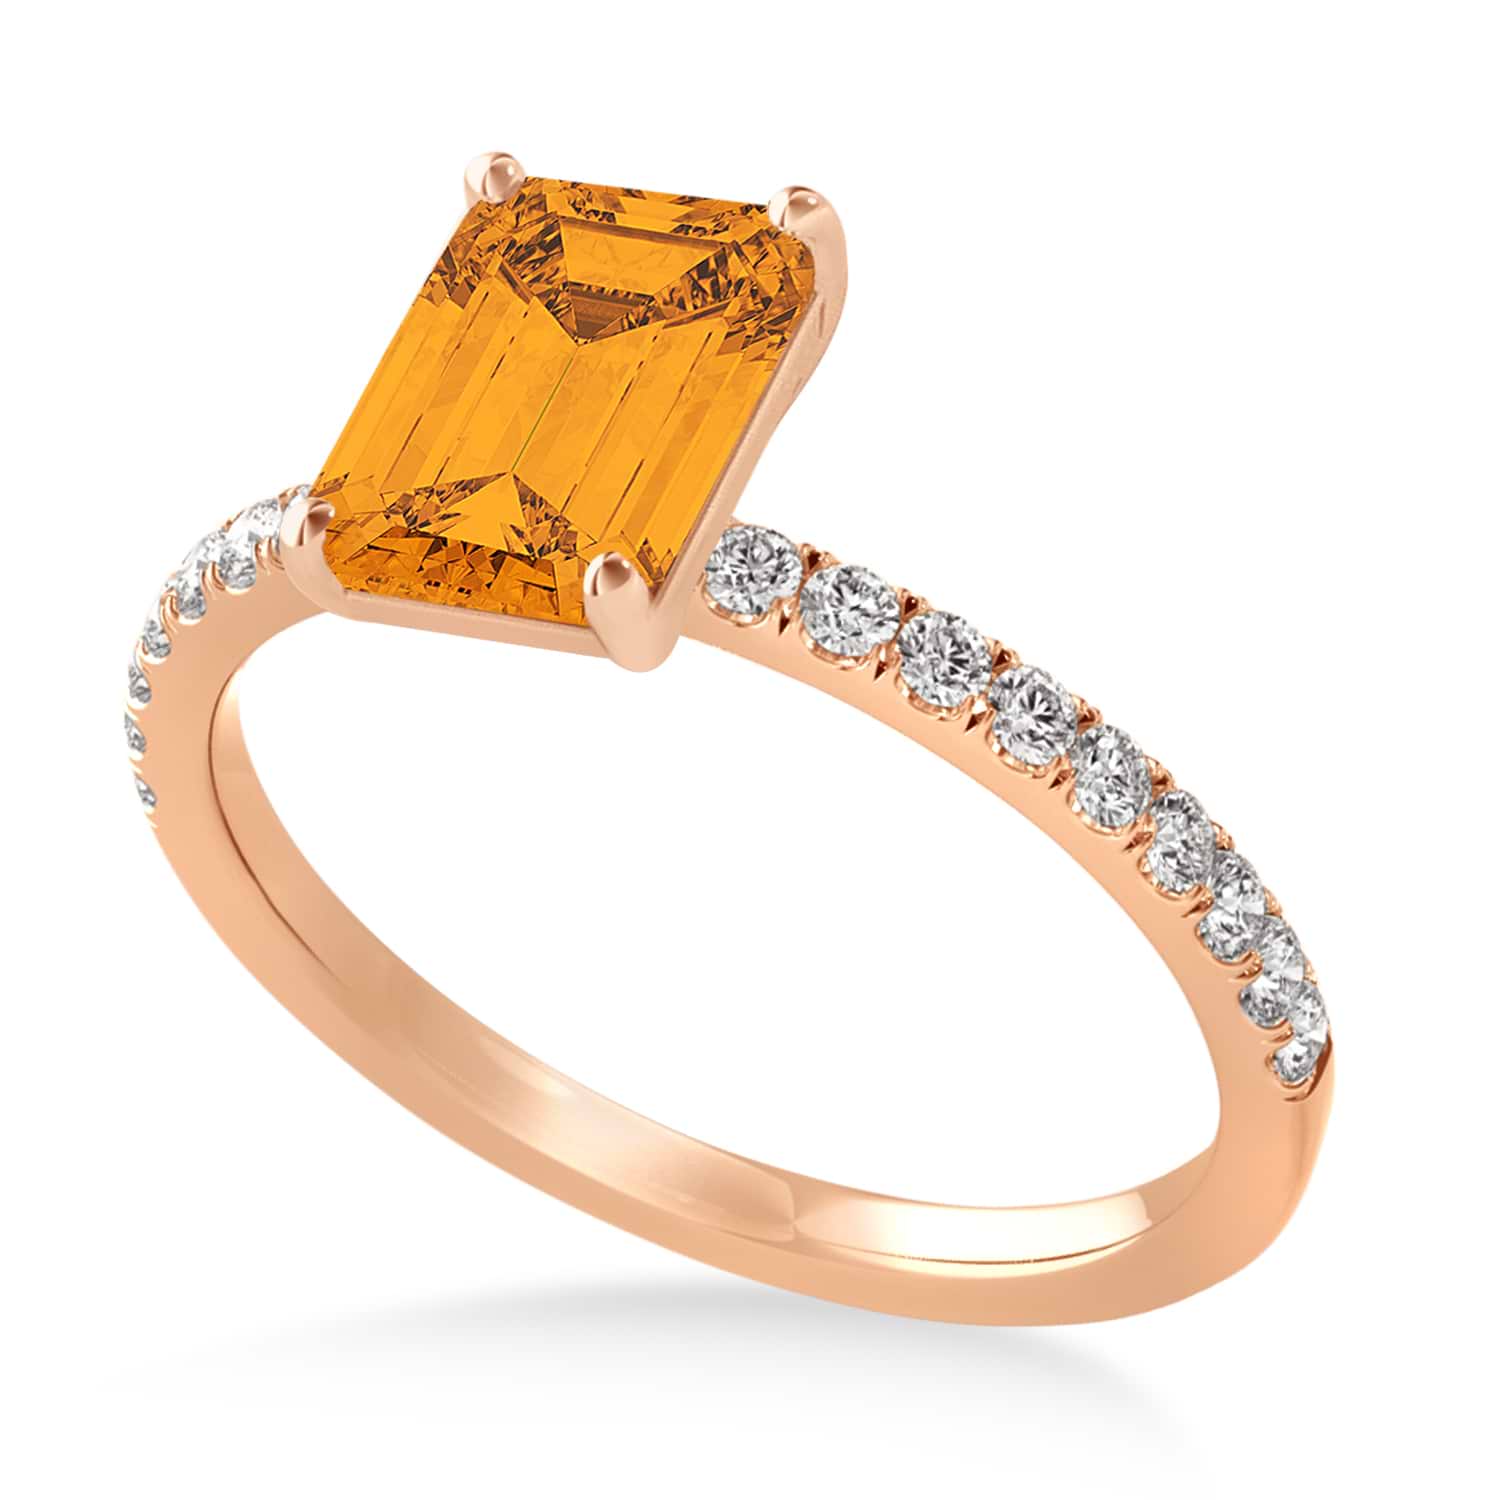 Emerald Citrine & Diamond Single Row Hidden Halo Engagement Ring 18k Rose Gold (1.31ct)